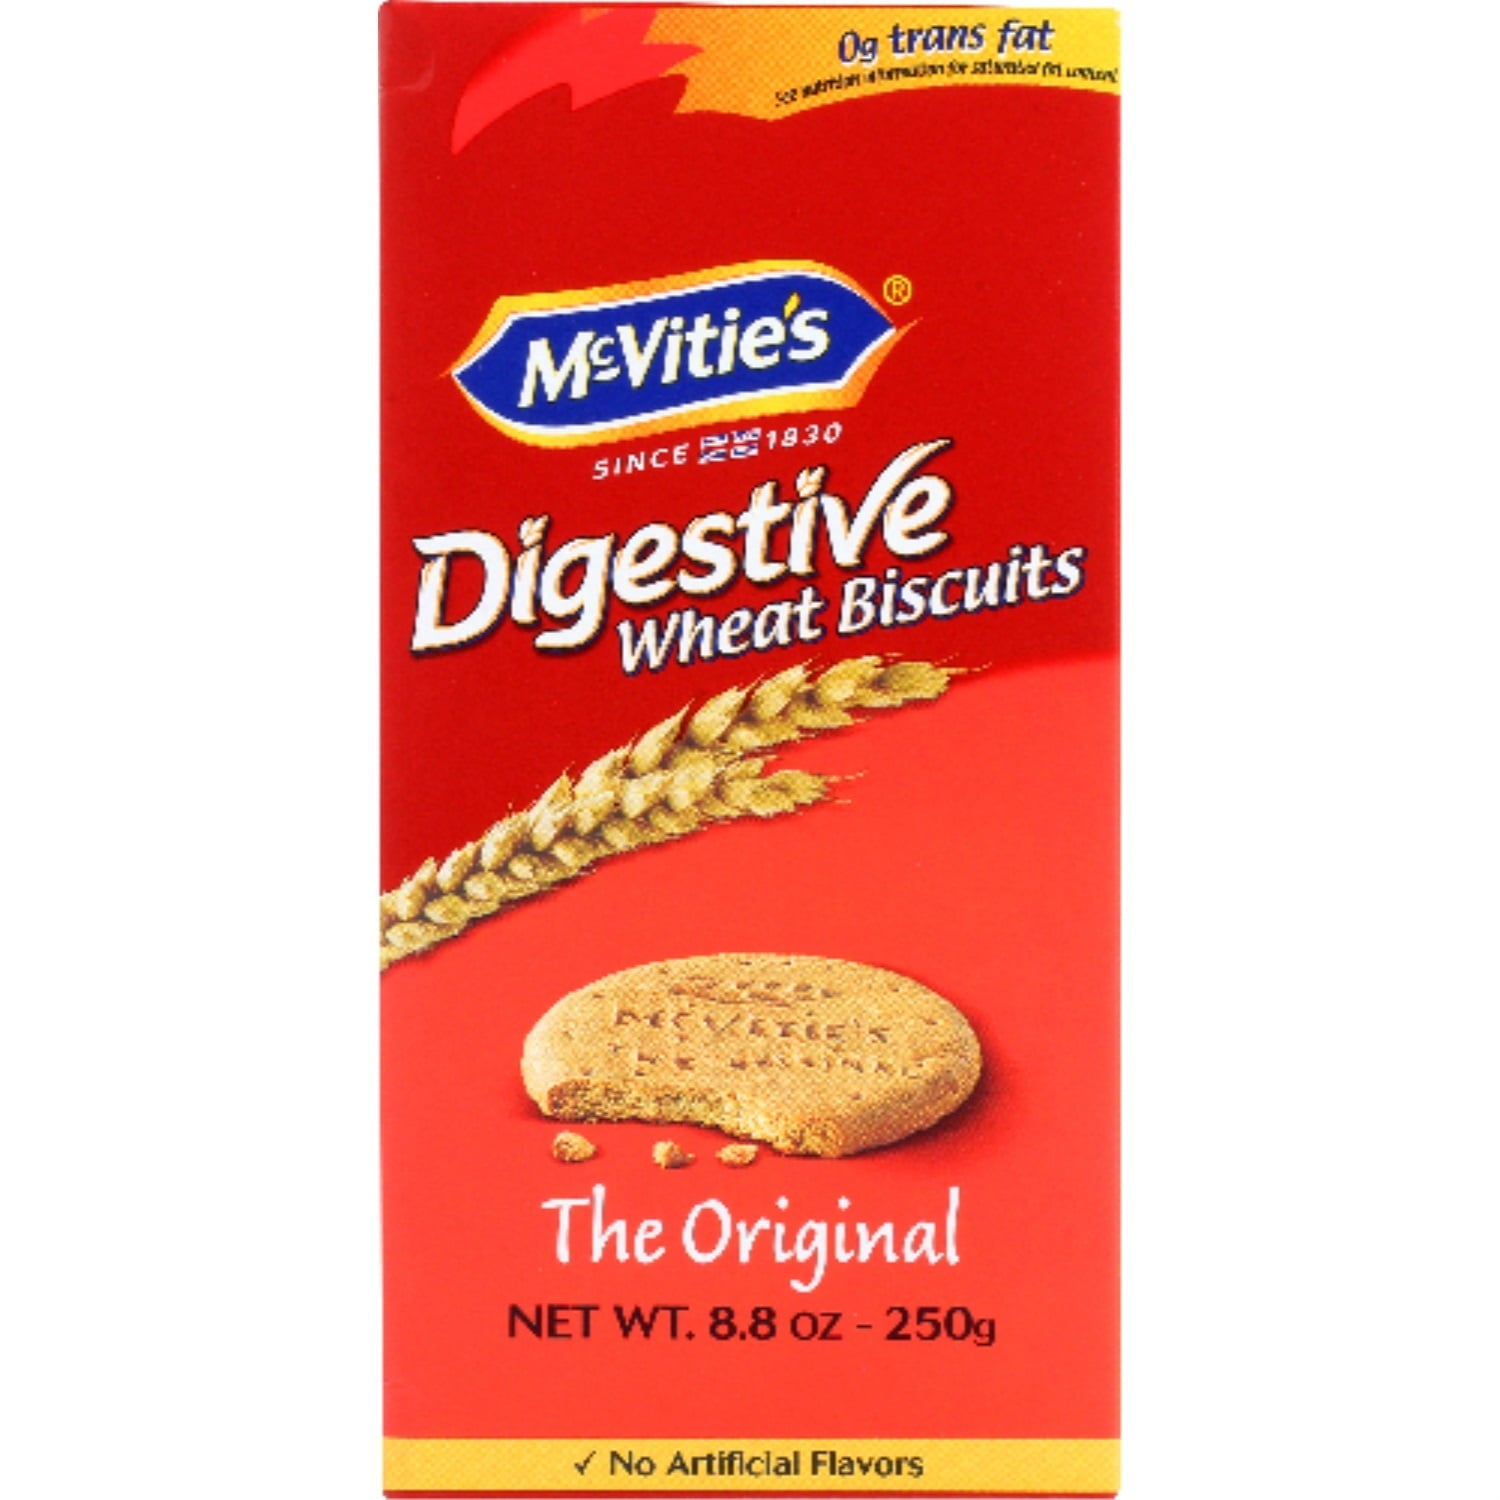 McVitie's Digestive Wheat Biscuits, Original, 8.8 Oz